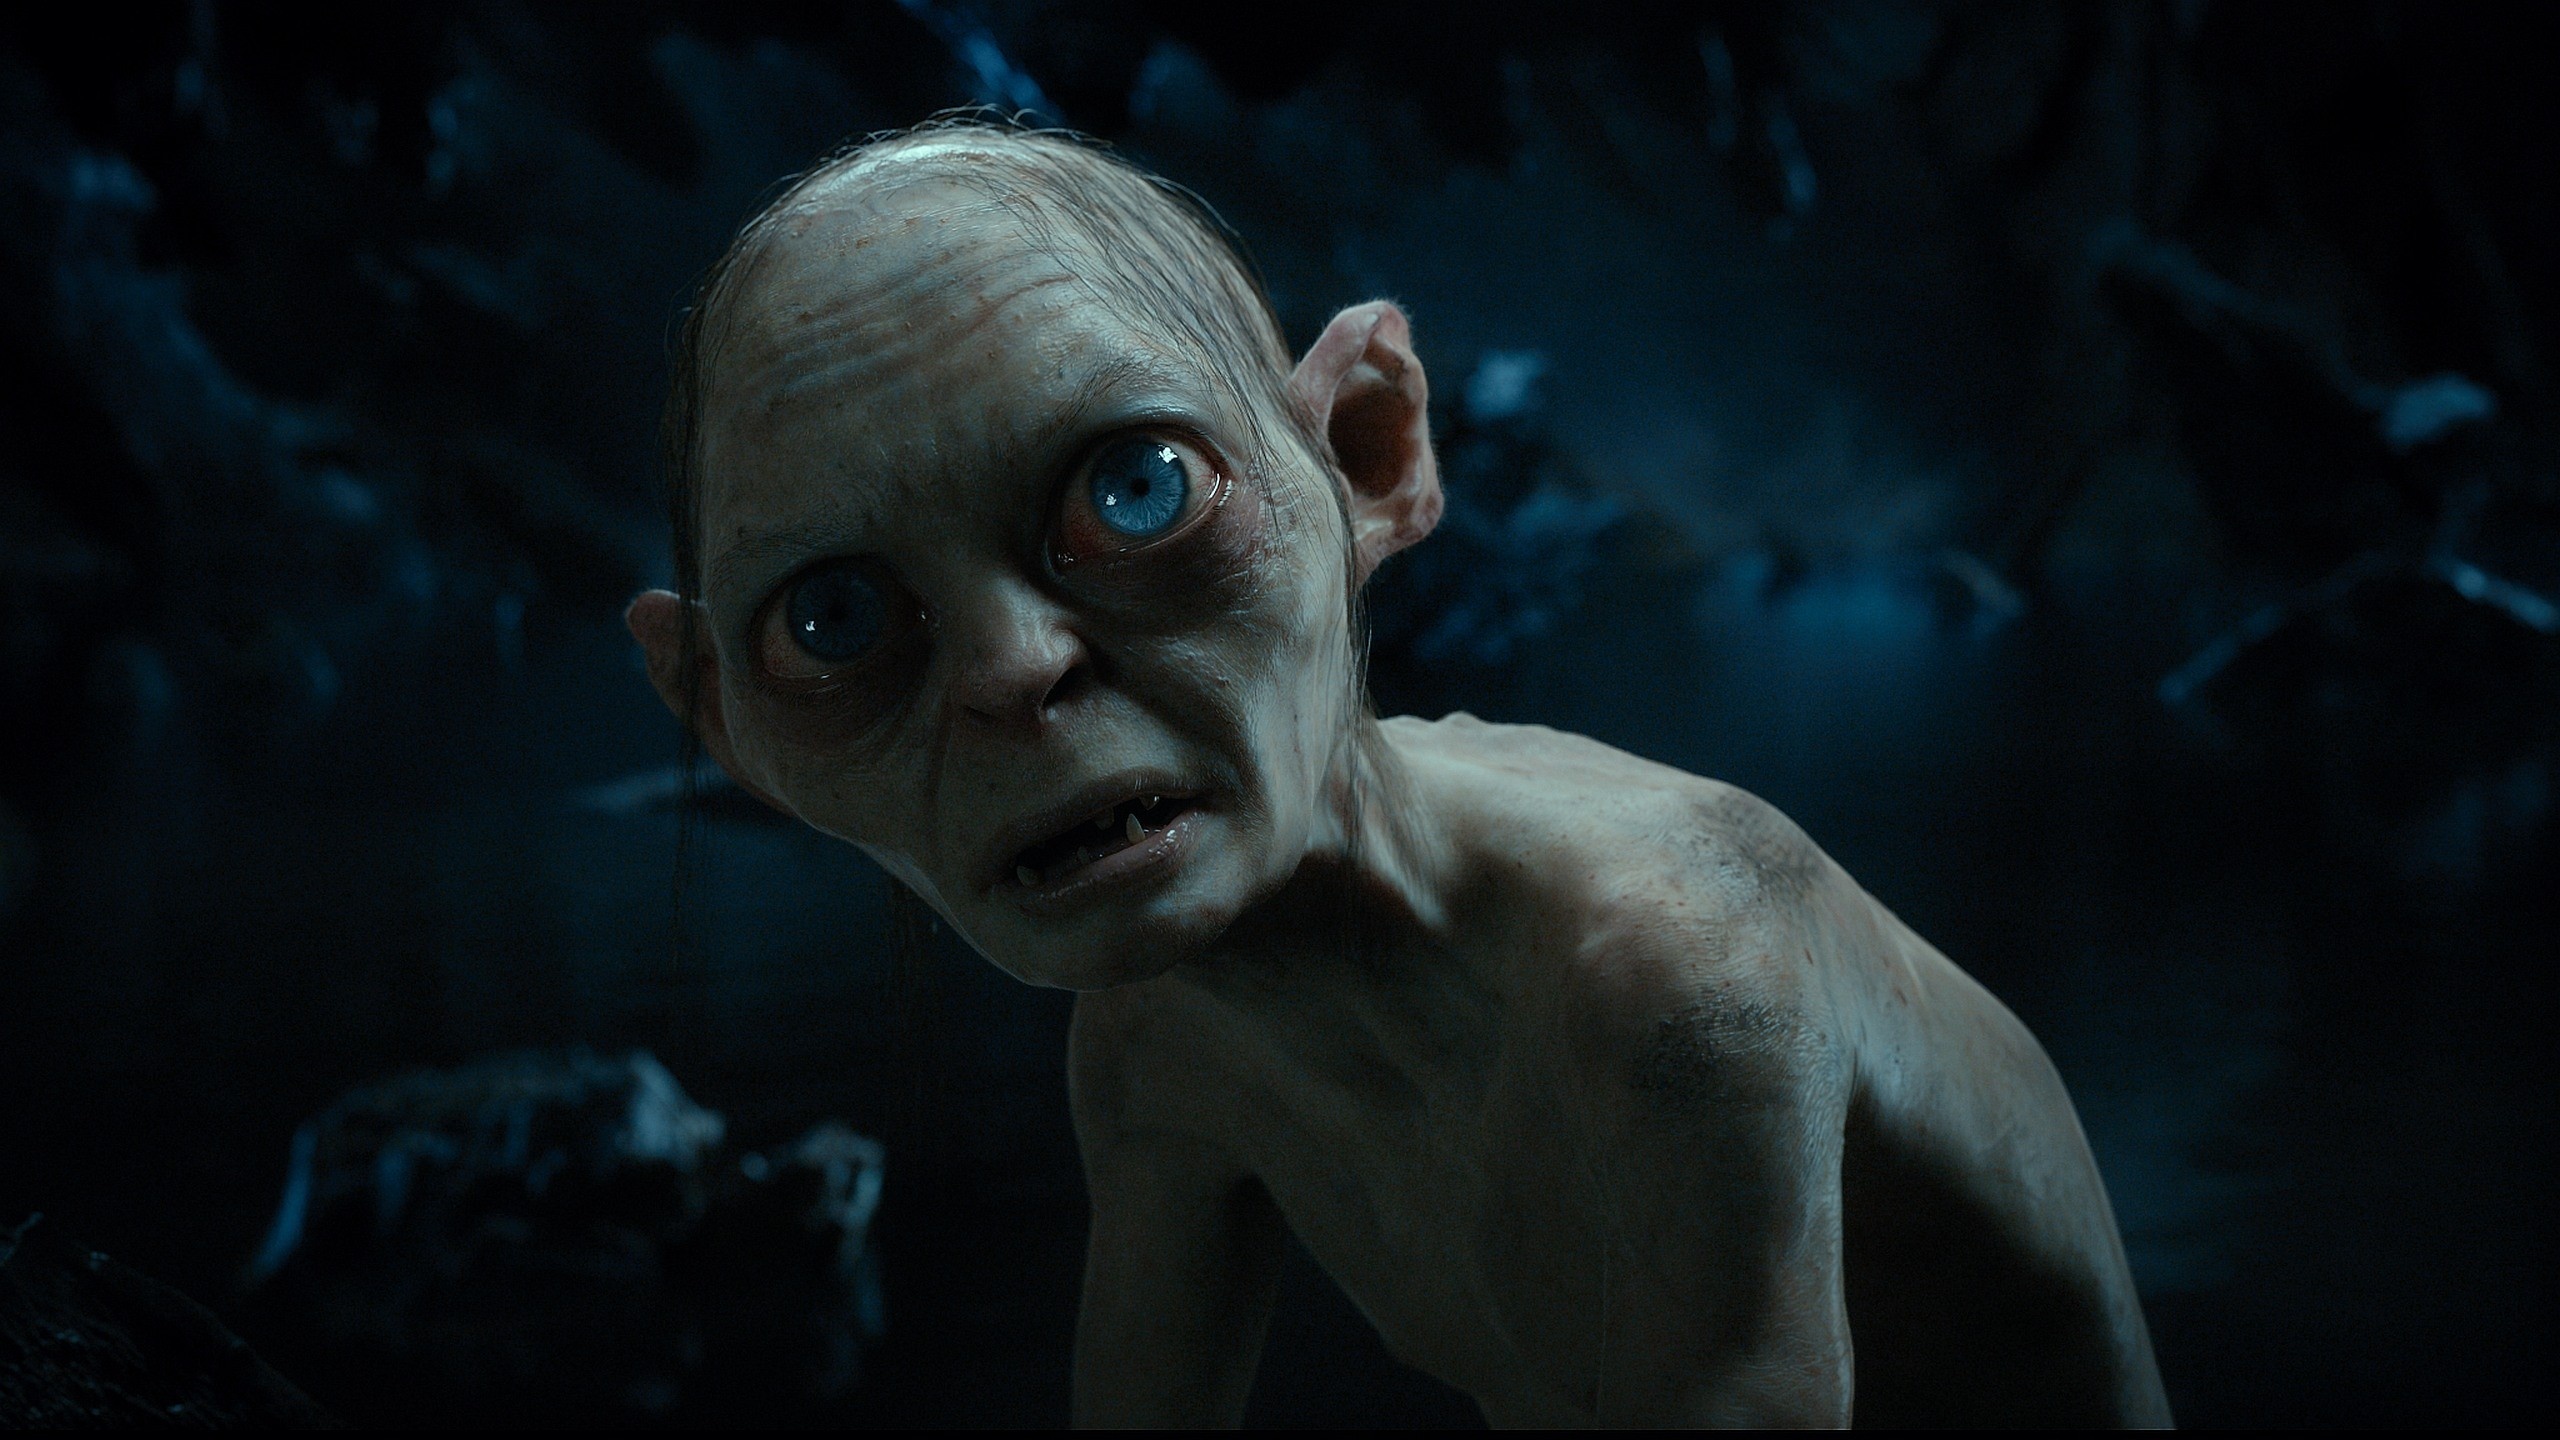 Gollum, The Hobbit wallpaper, Dark and mysterious, Fantasy character, 2560x1440 HD Desktop